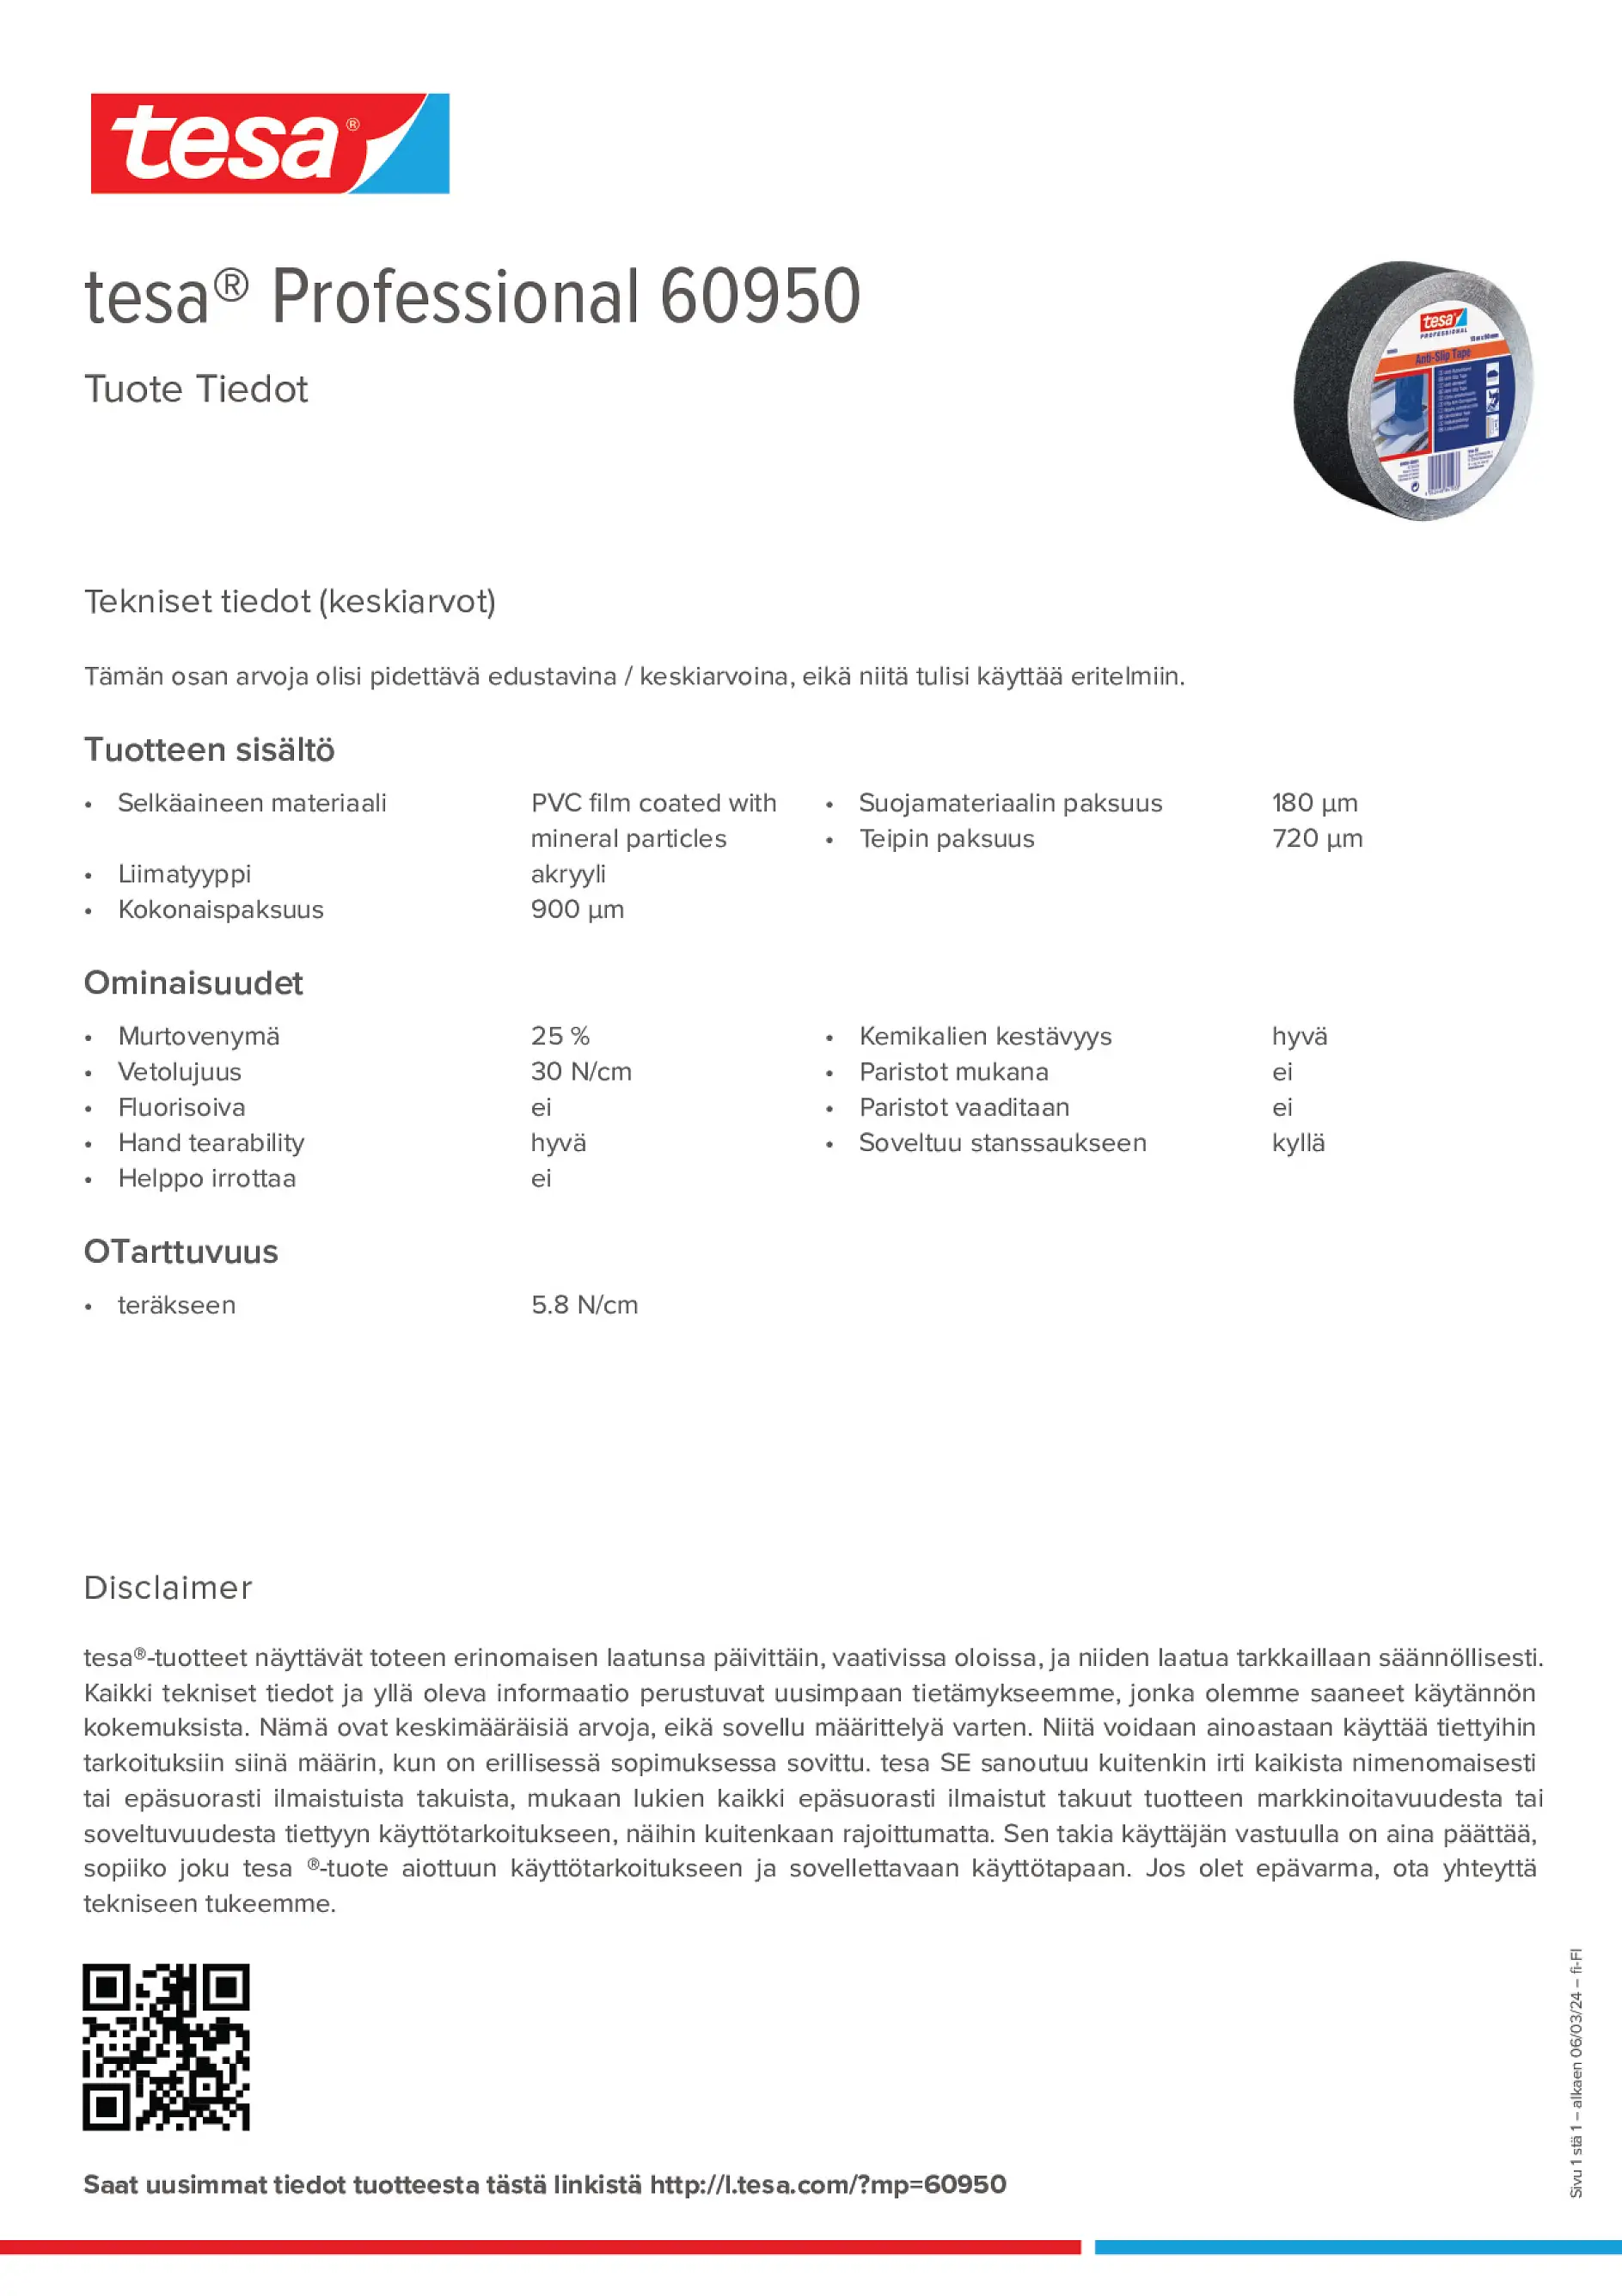 Product information_tesa® Professional 60950_fi-FI